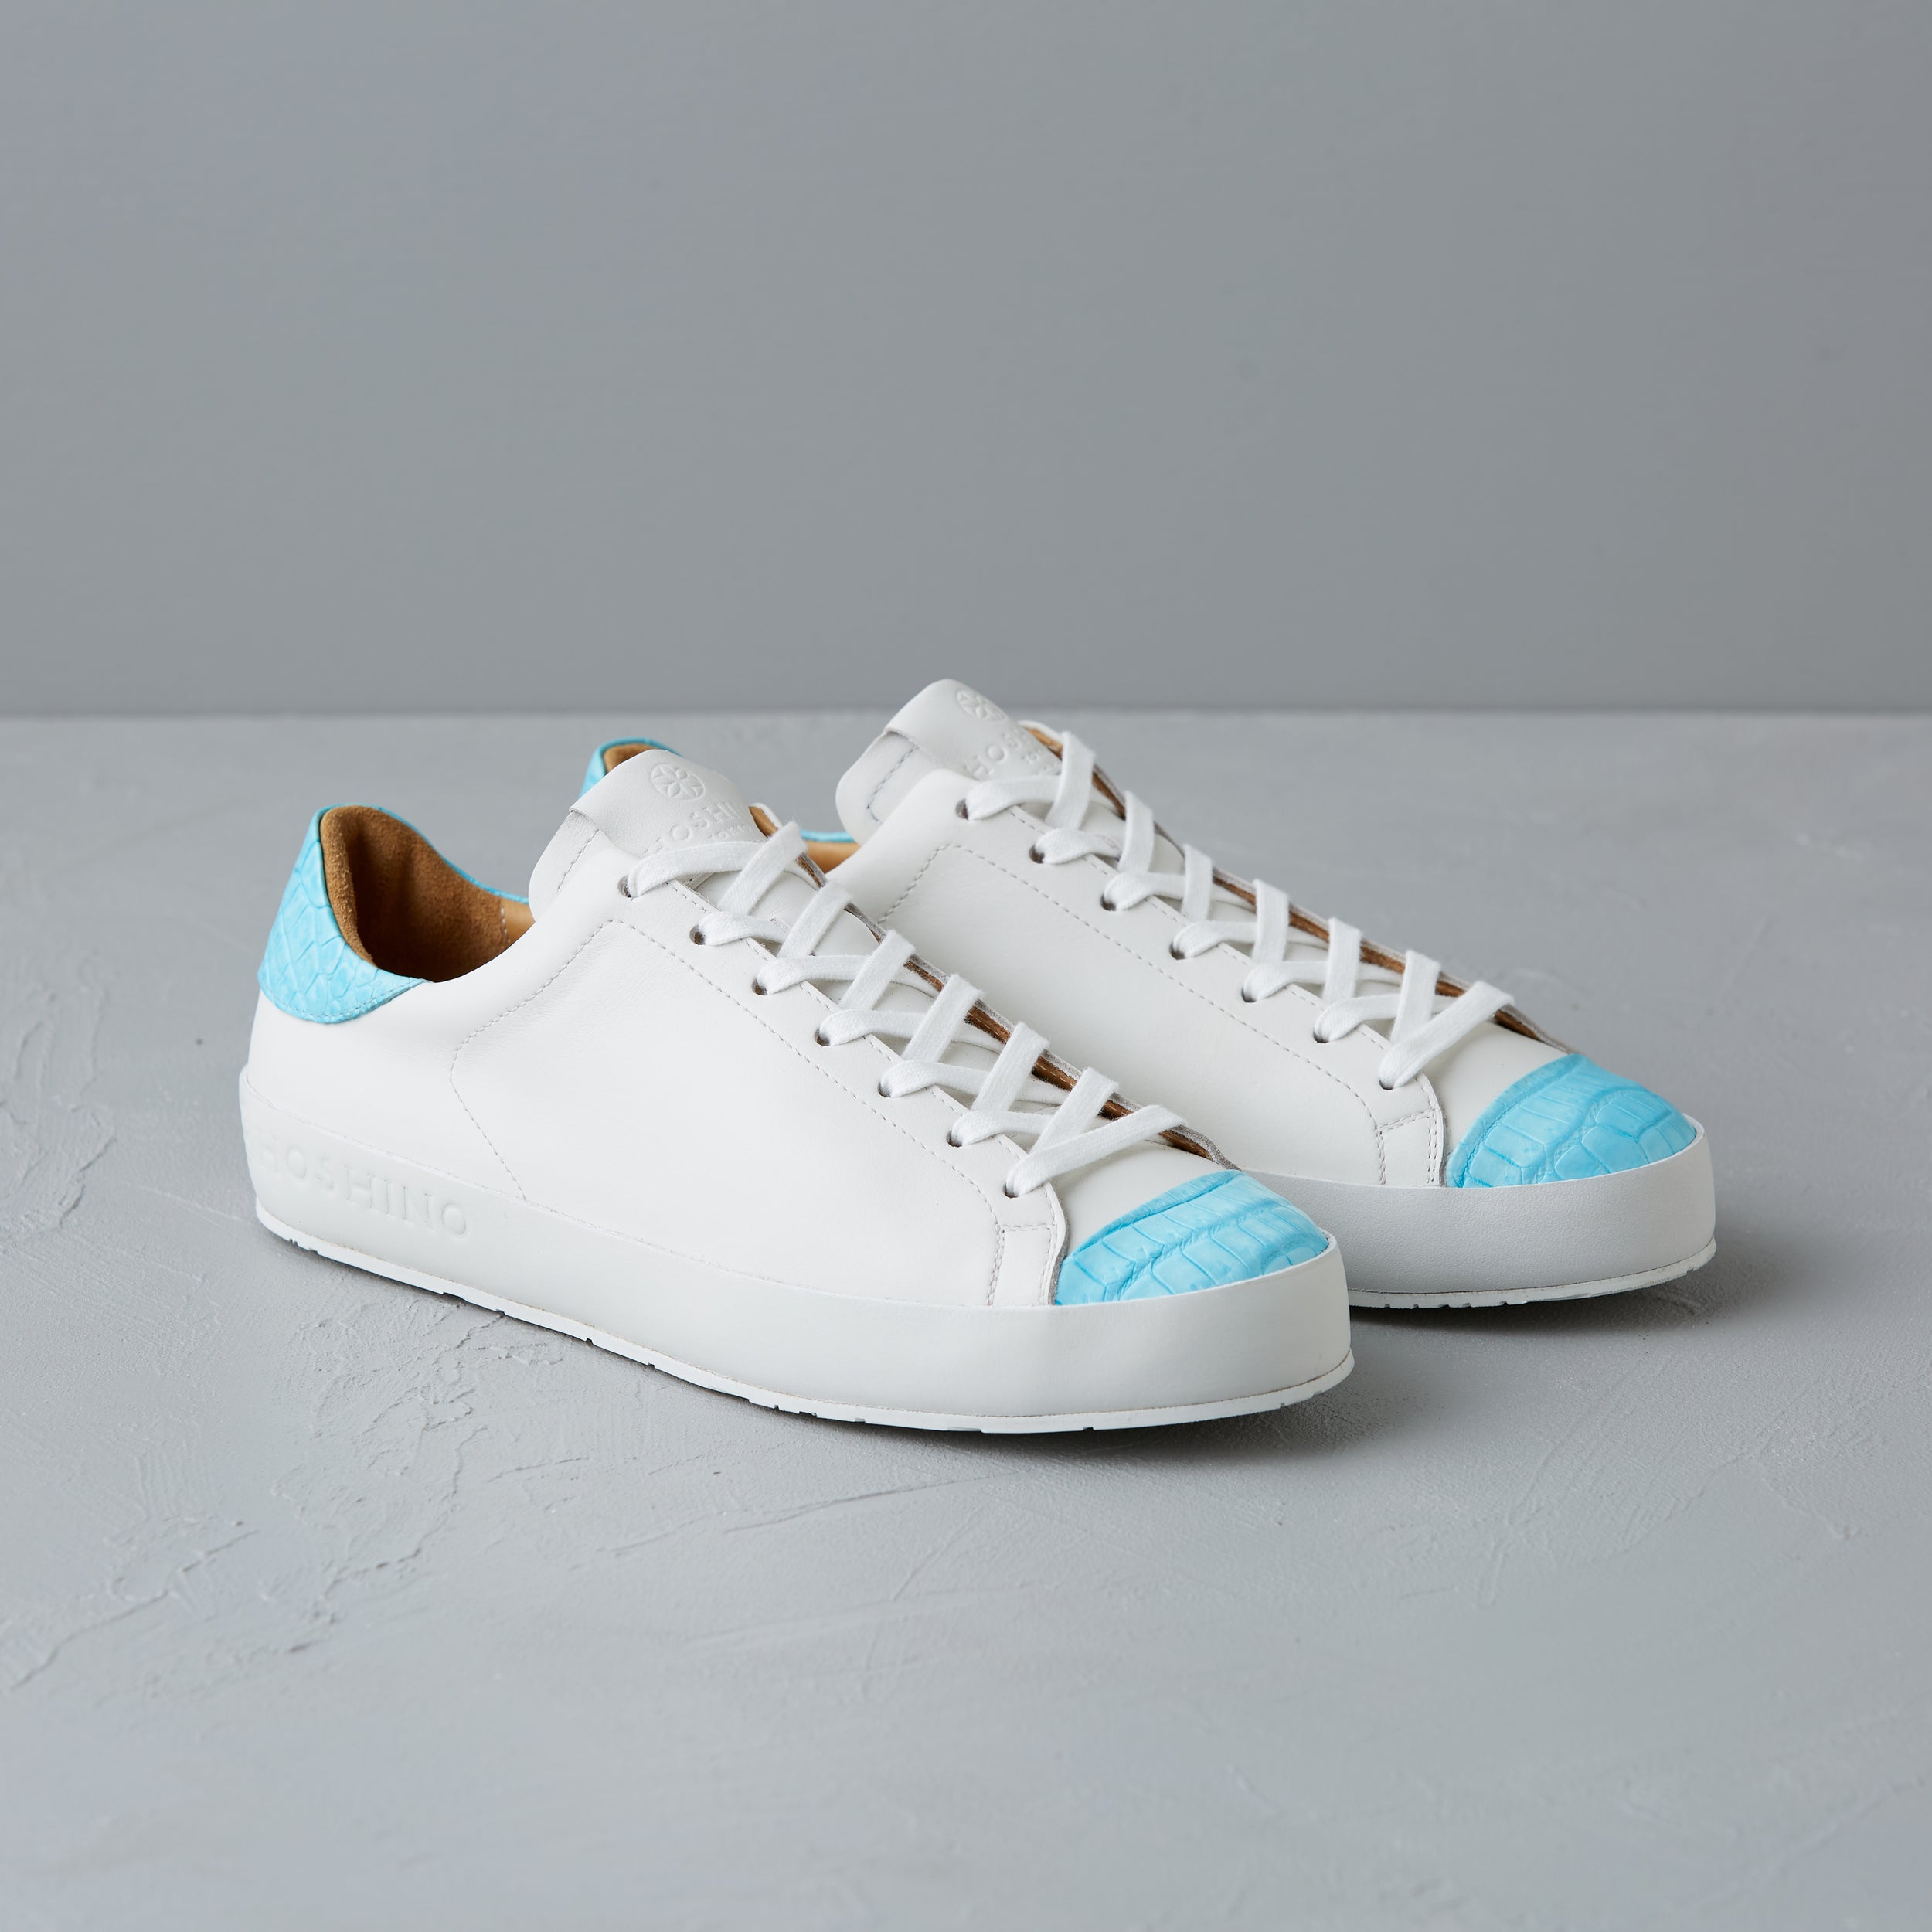 [women's] Liberte - low-top sneakers - combination toe white and blue crocodile